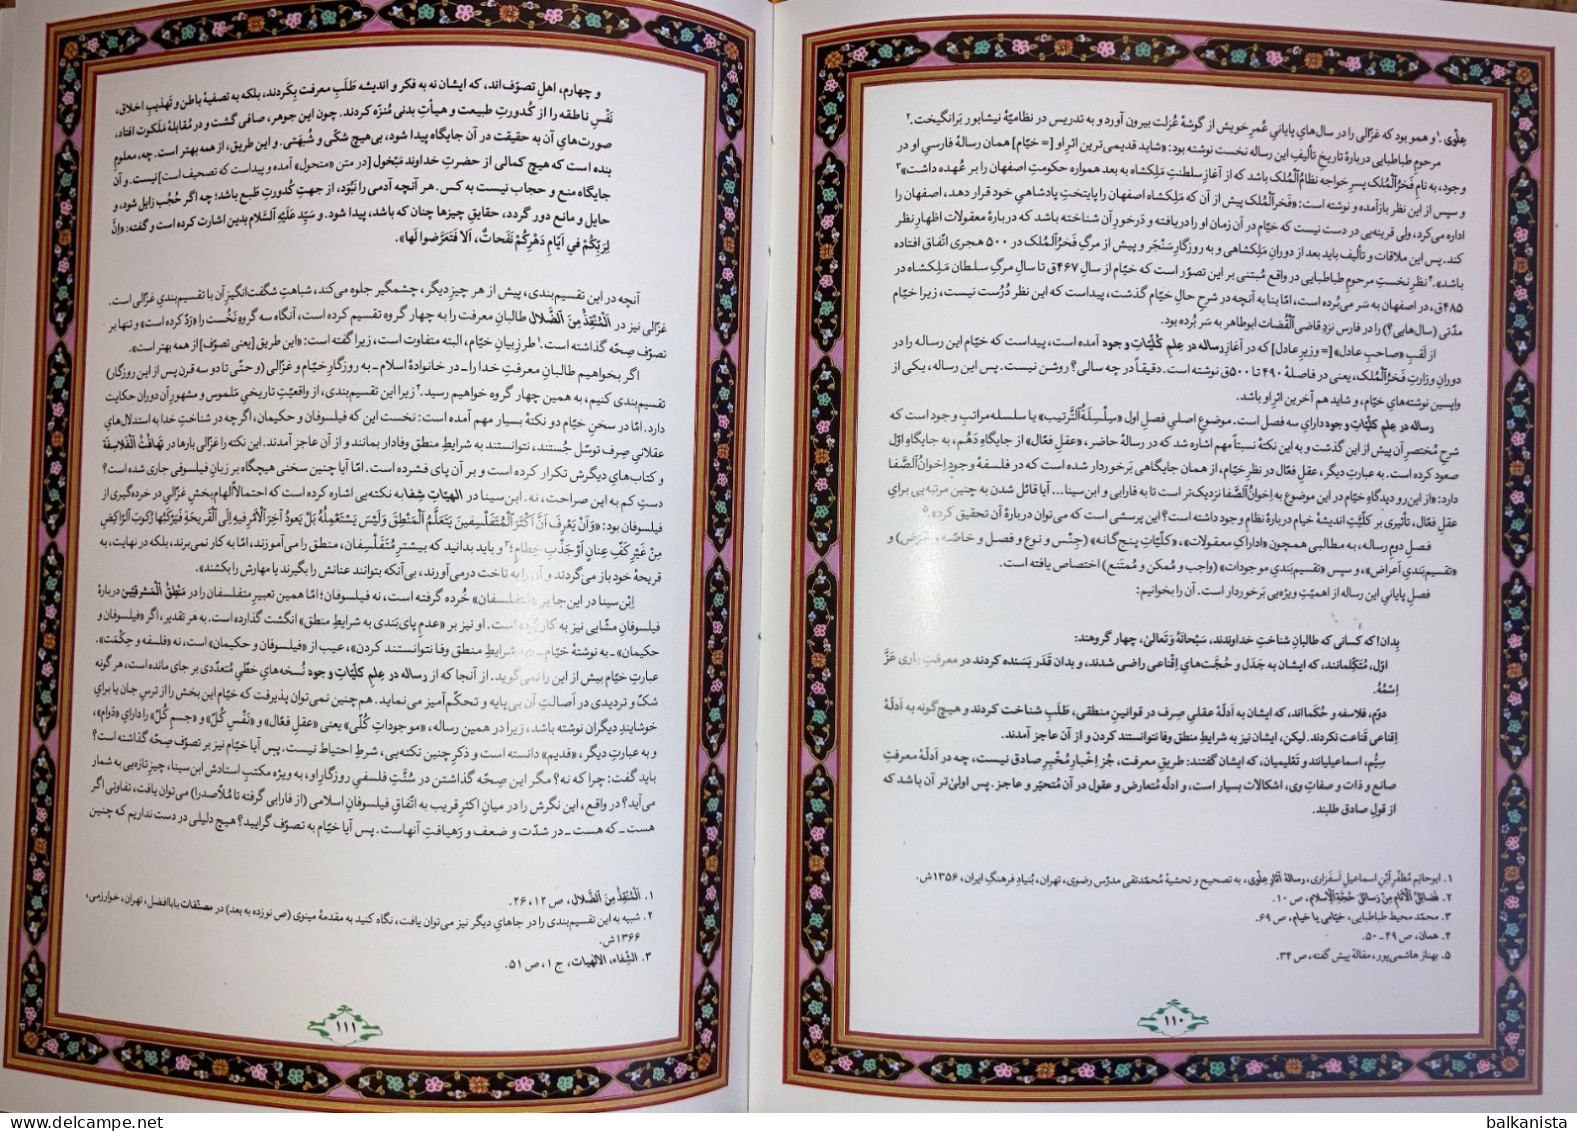 Rubaiyat of Omar Khayyam  - Umar Khayyam And The Rubaiyat Persian Illustrated